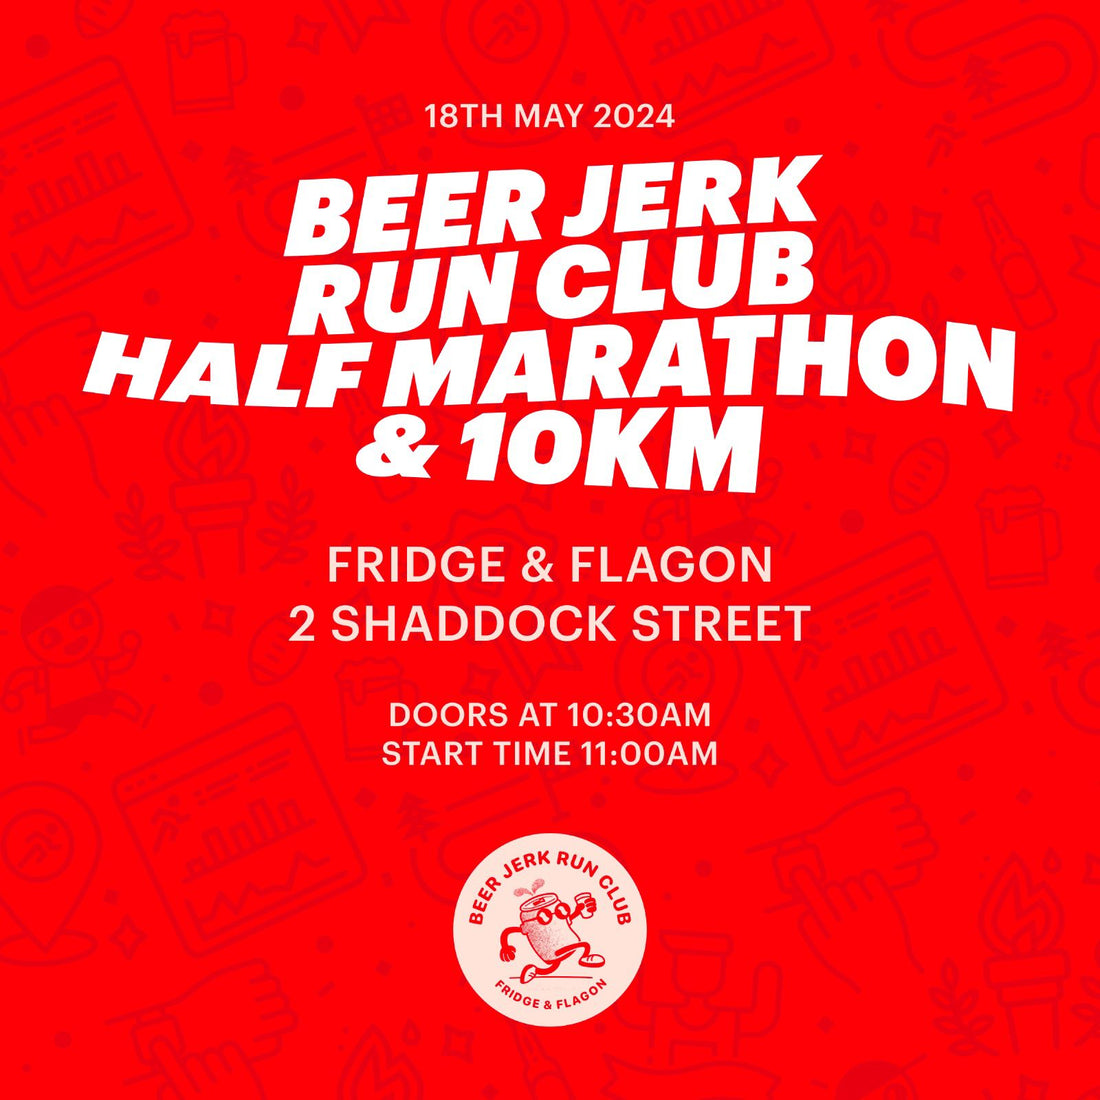 Beer Jerk Run Club Half Marathon Ticket